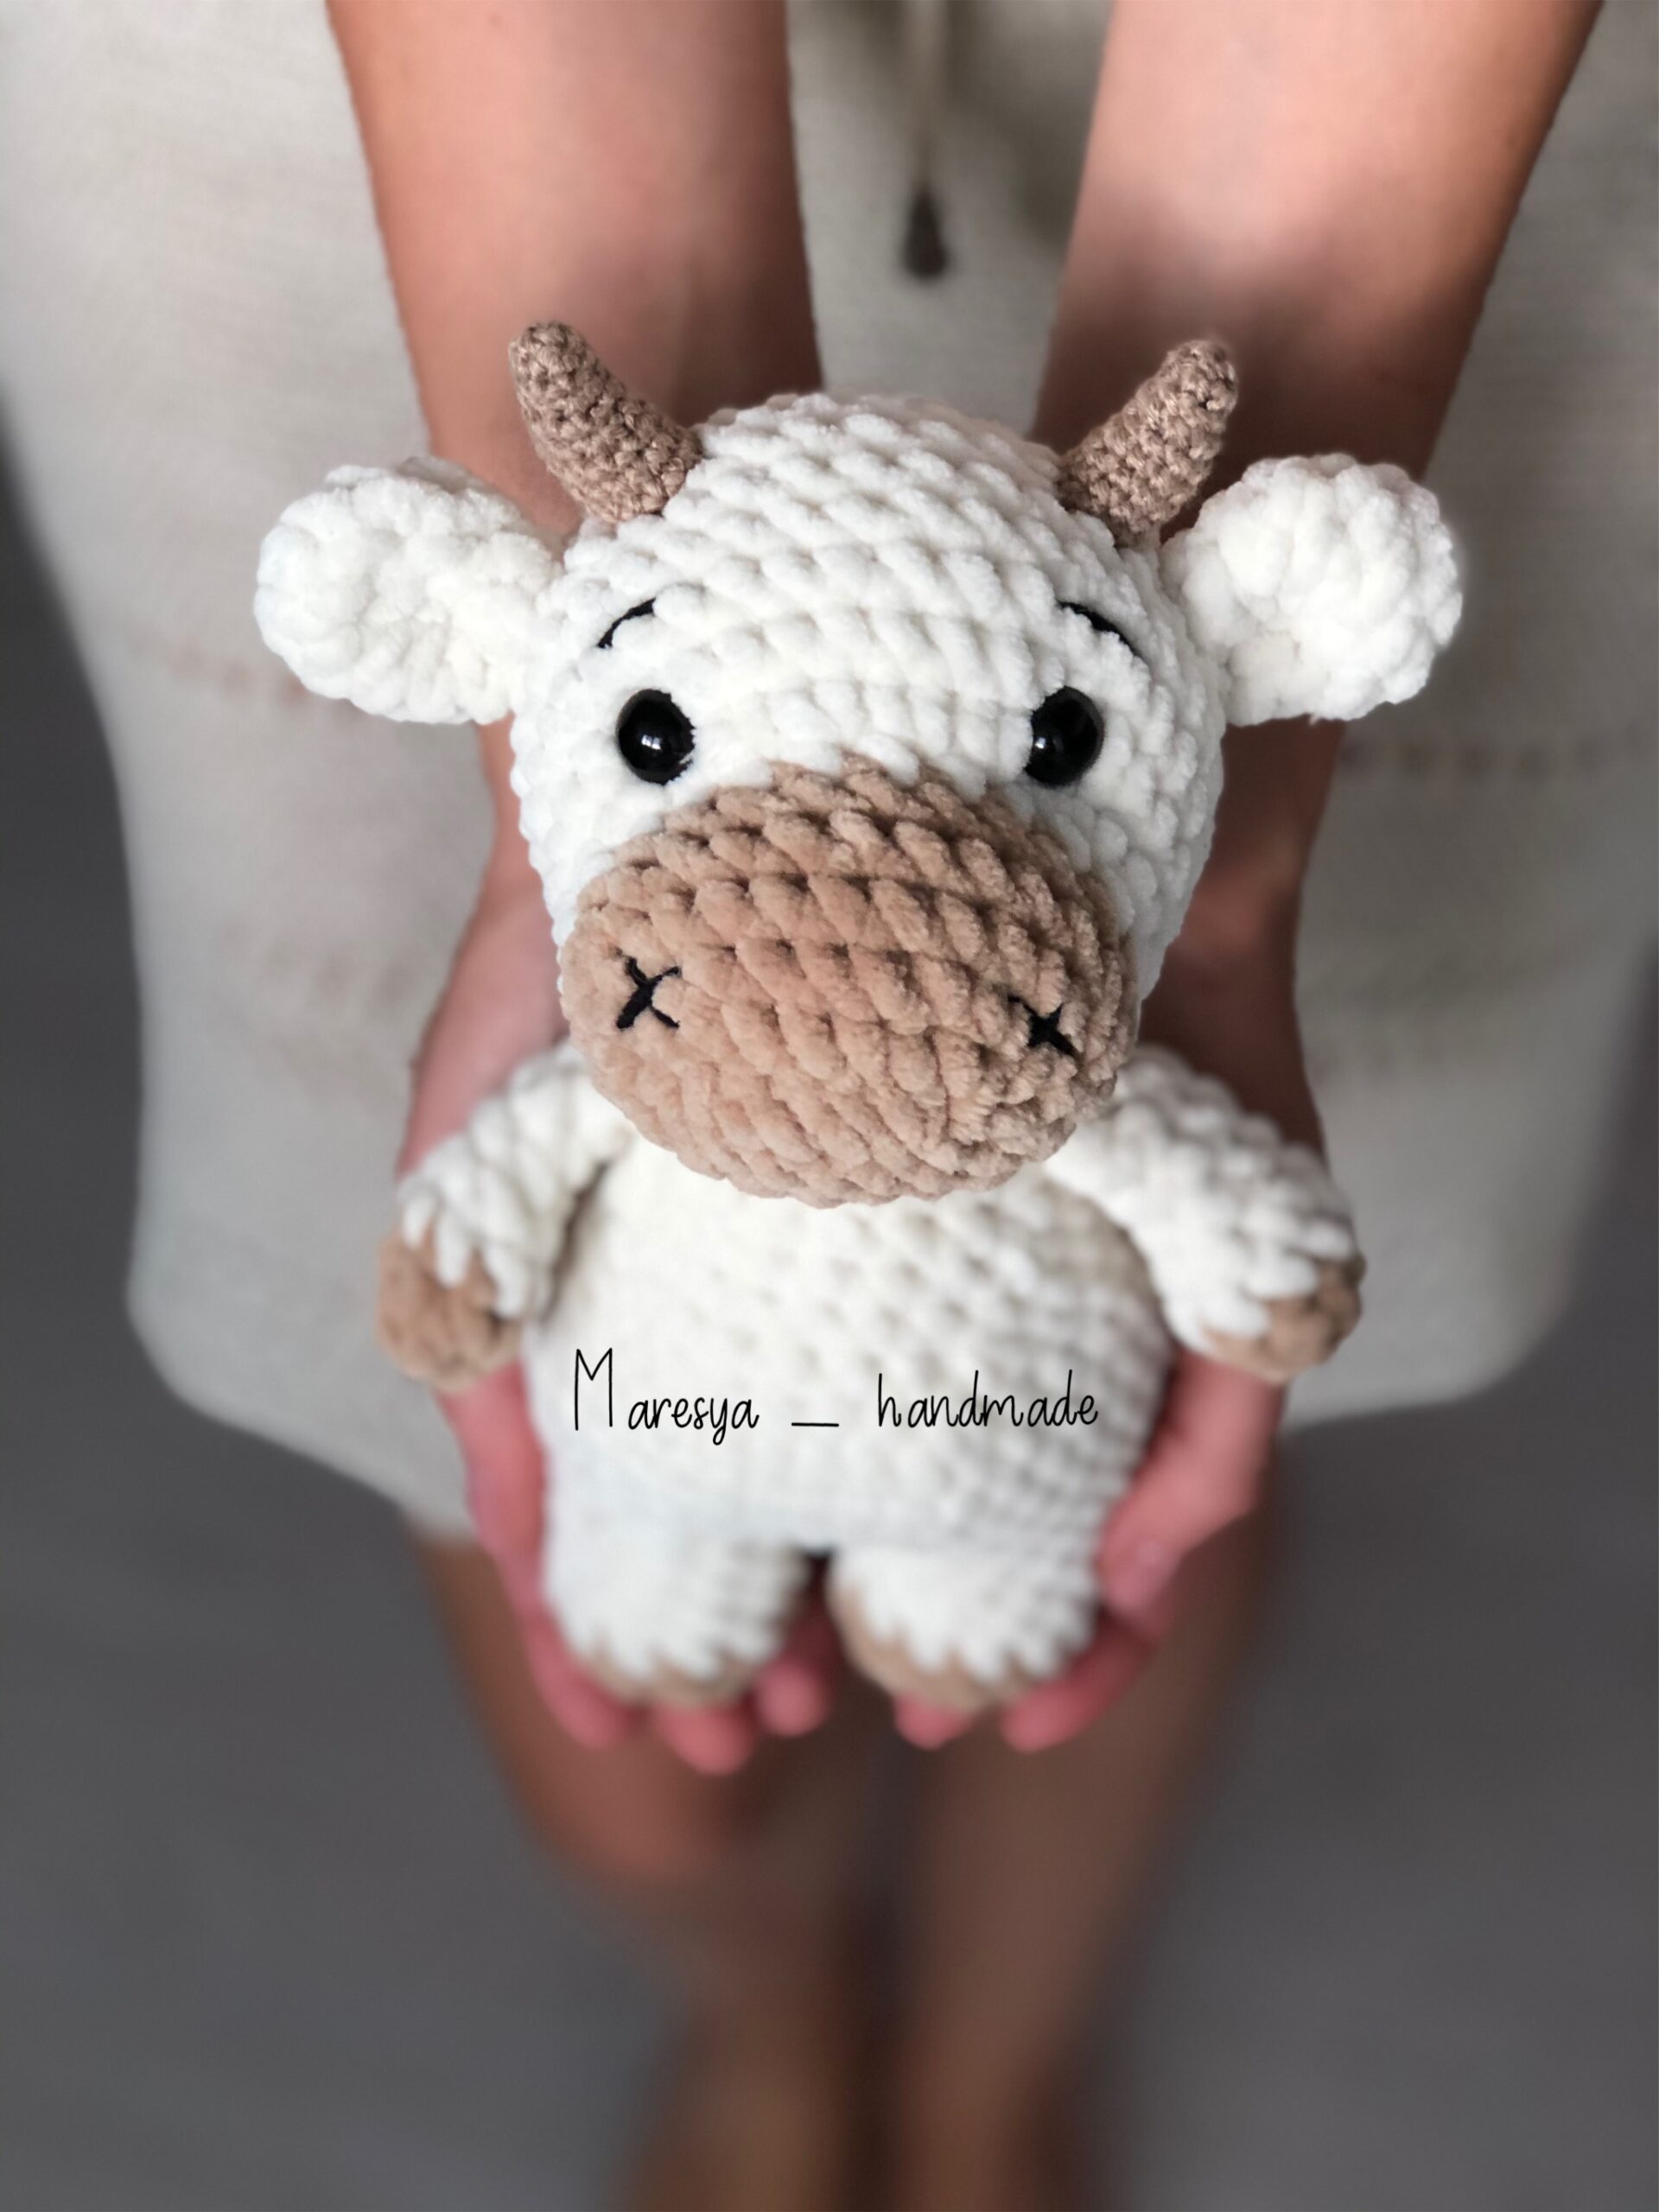 Funny Bull Keychain Crochet Pattern – KnittingKitty – I Crochet patterns  for amigurumi toys I Knitting Kitty